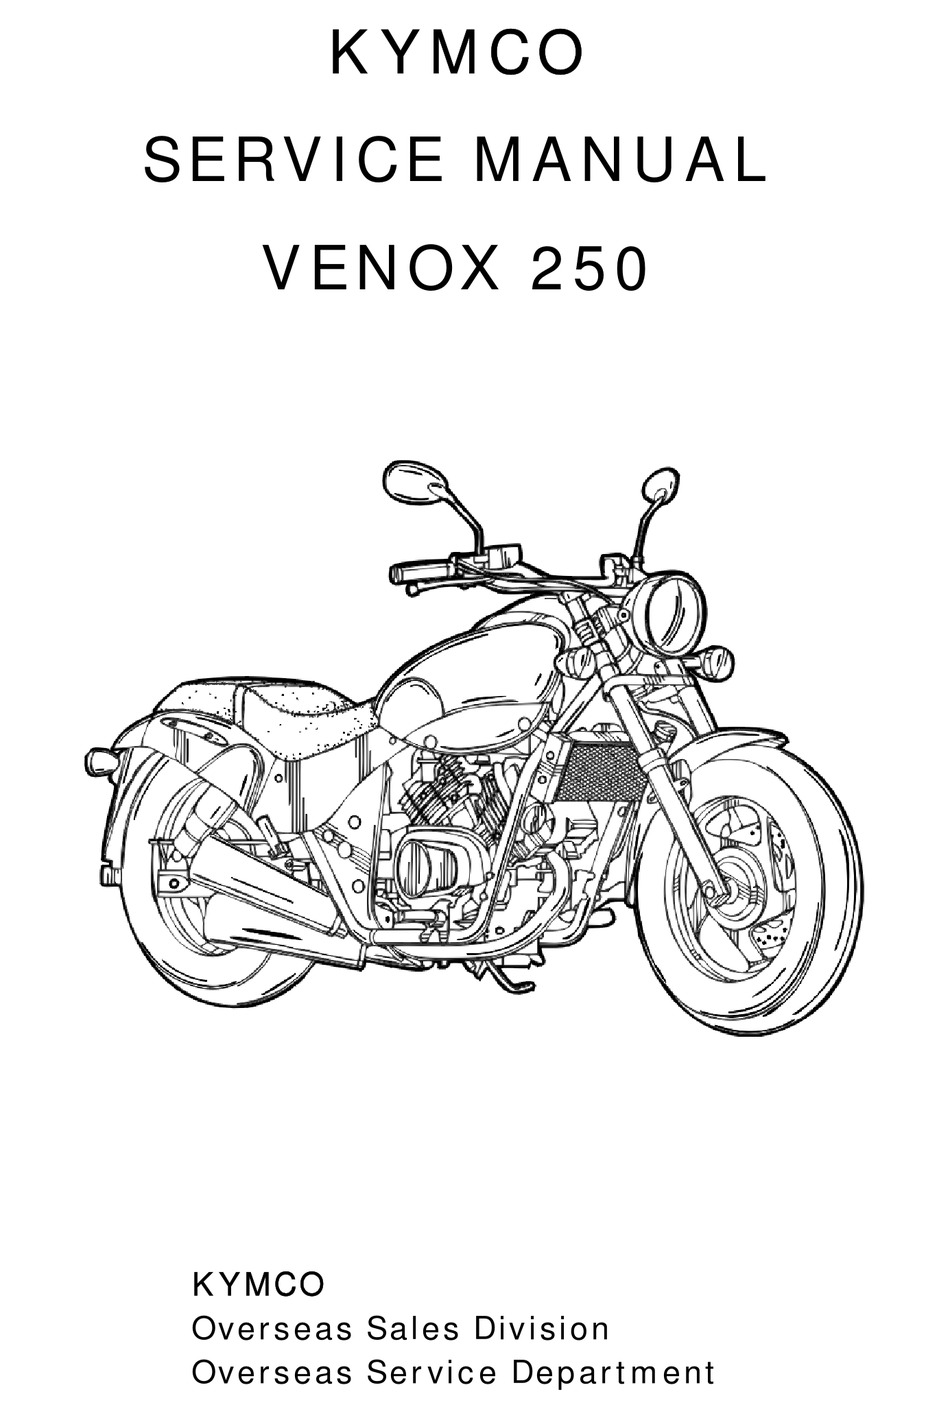 KYMCO VENOX 250 Owners Workshop Service Repair Parts Manual PDF on CD-R